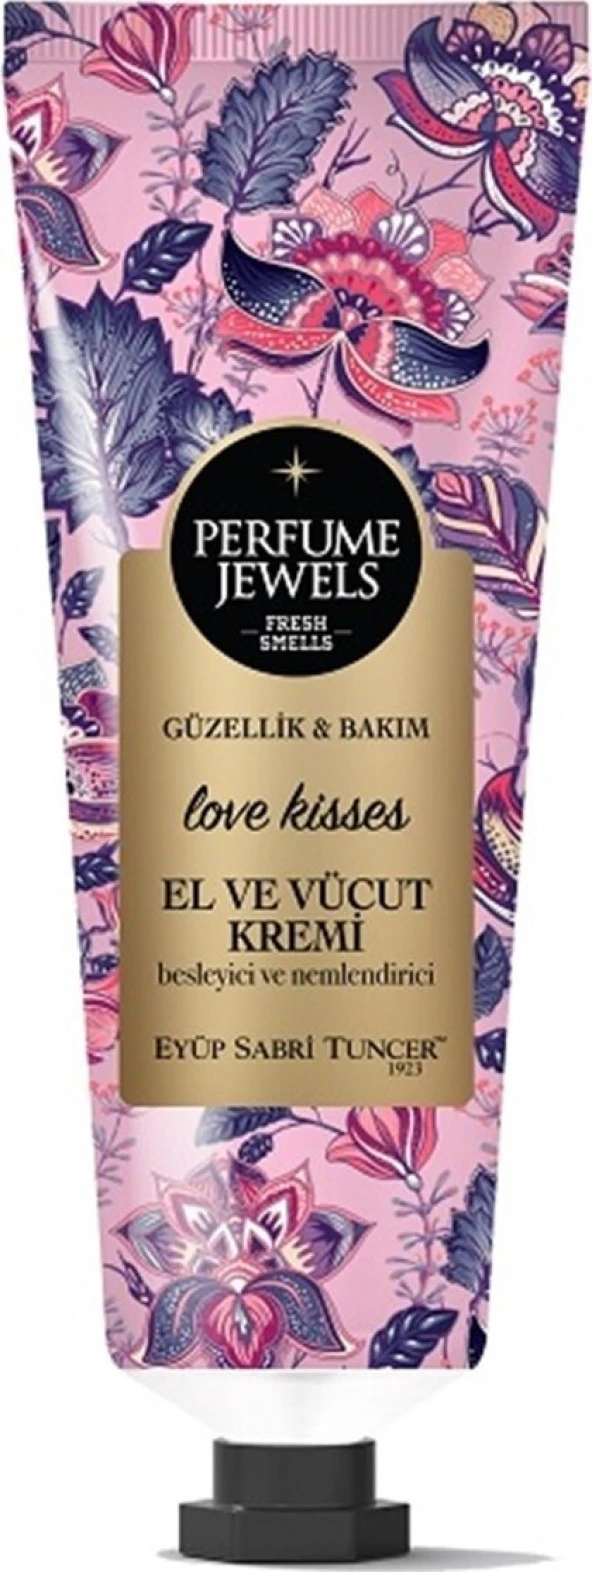 Eyüp Sabri Tuncer Perfume Jewels Love Kisses El Kremi 50ML x 6